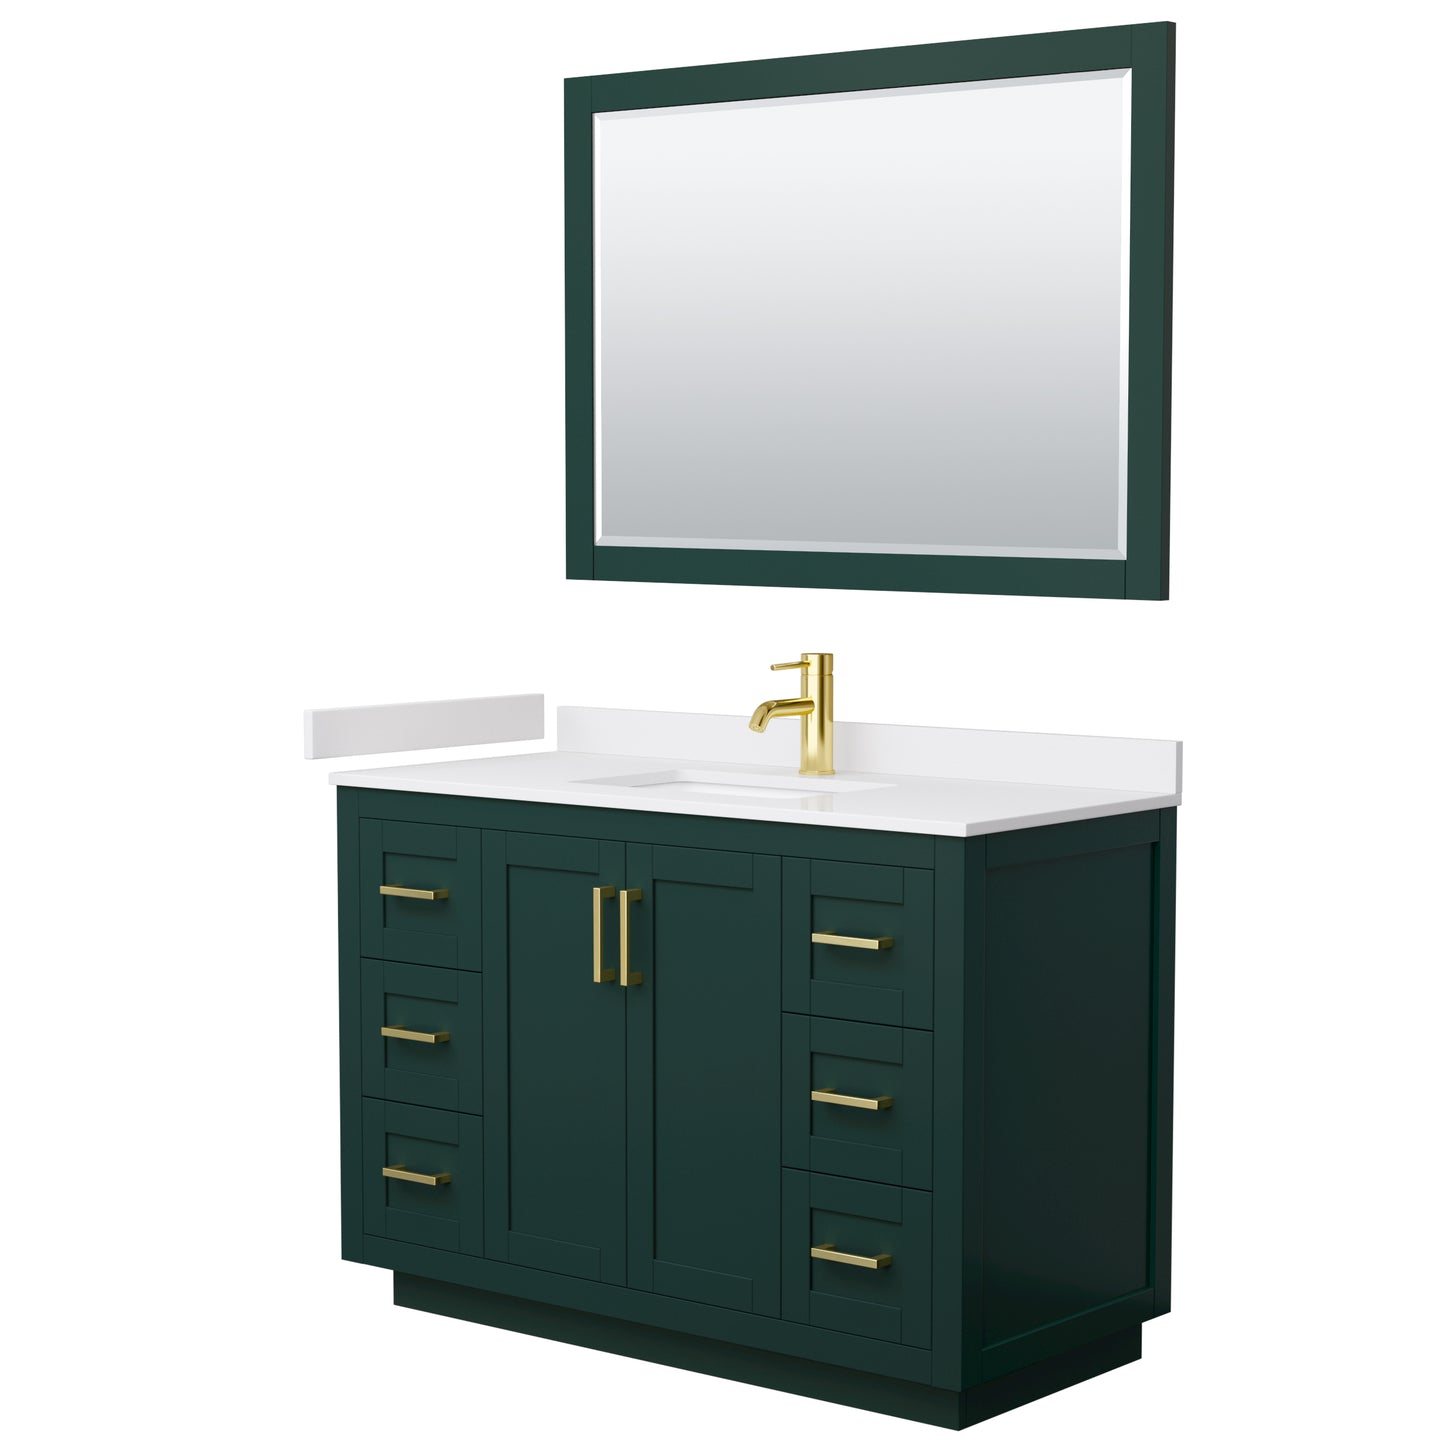 Wyndham Miranda 48 Inch Single Bathroom Vanity in Green with White Cultured Marble Countertop Undermount Square Sink and Trim - Luxe Bathroom Vanities